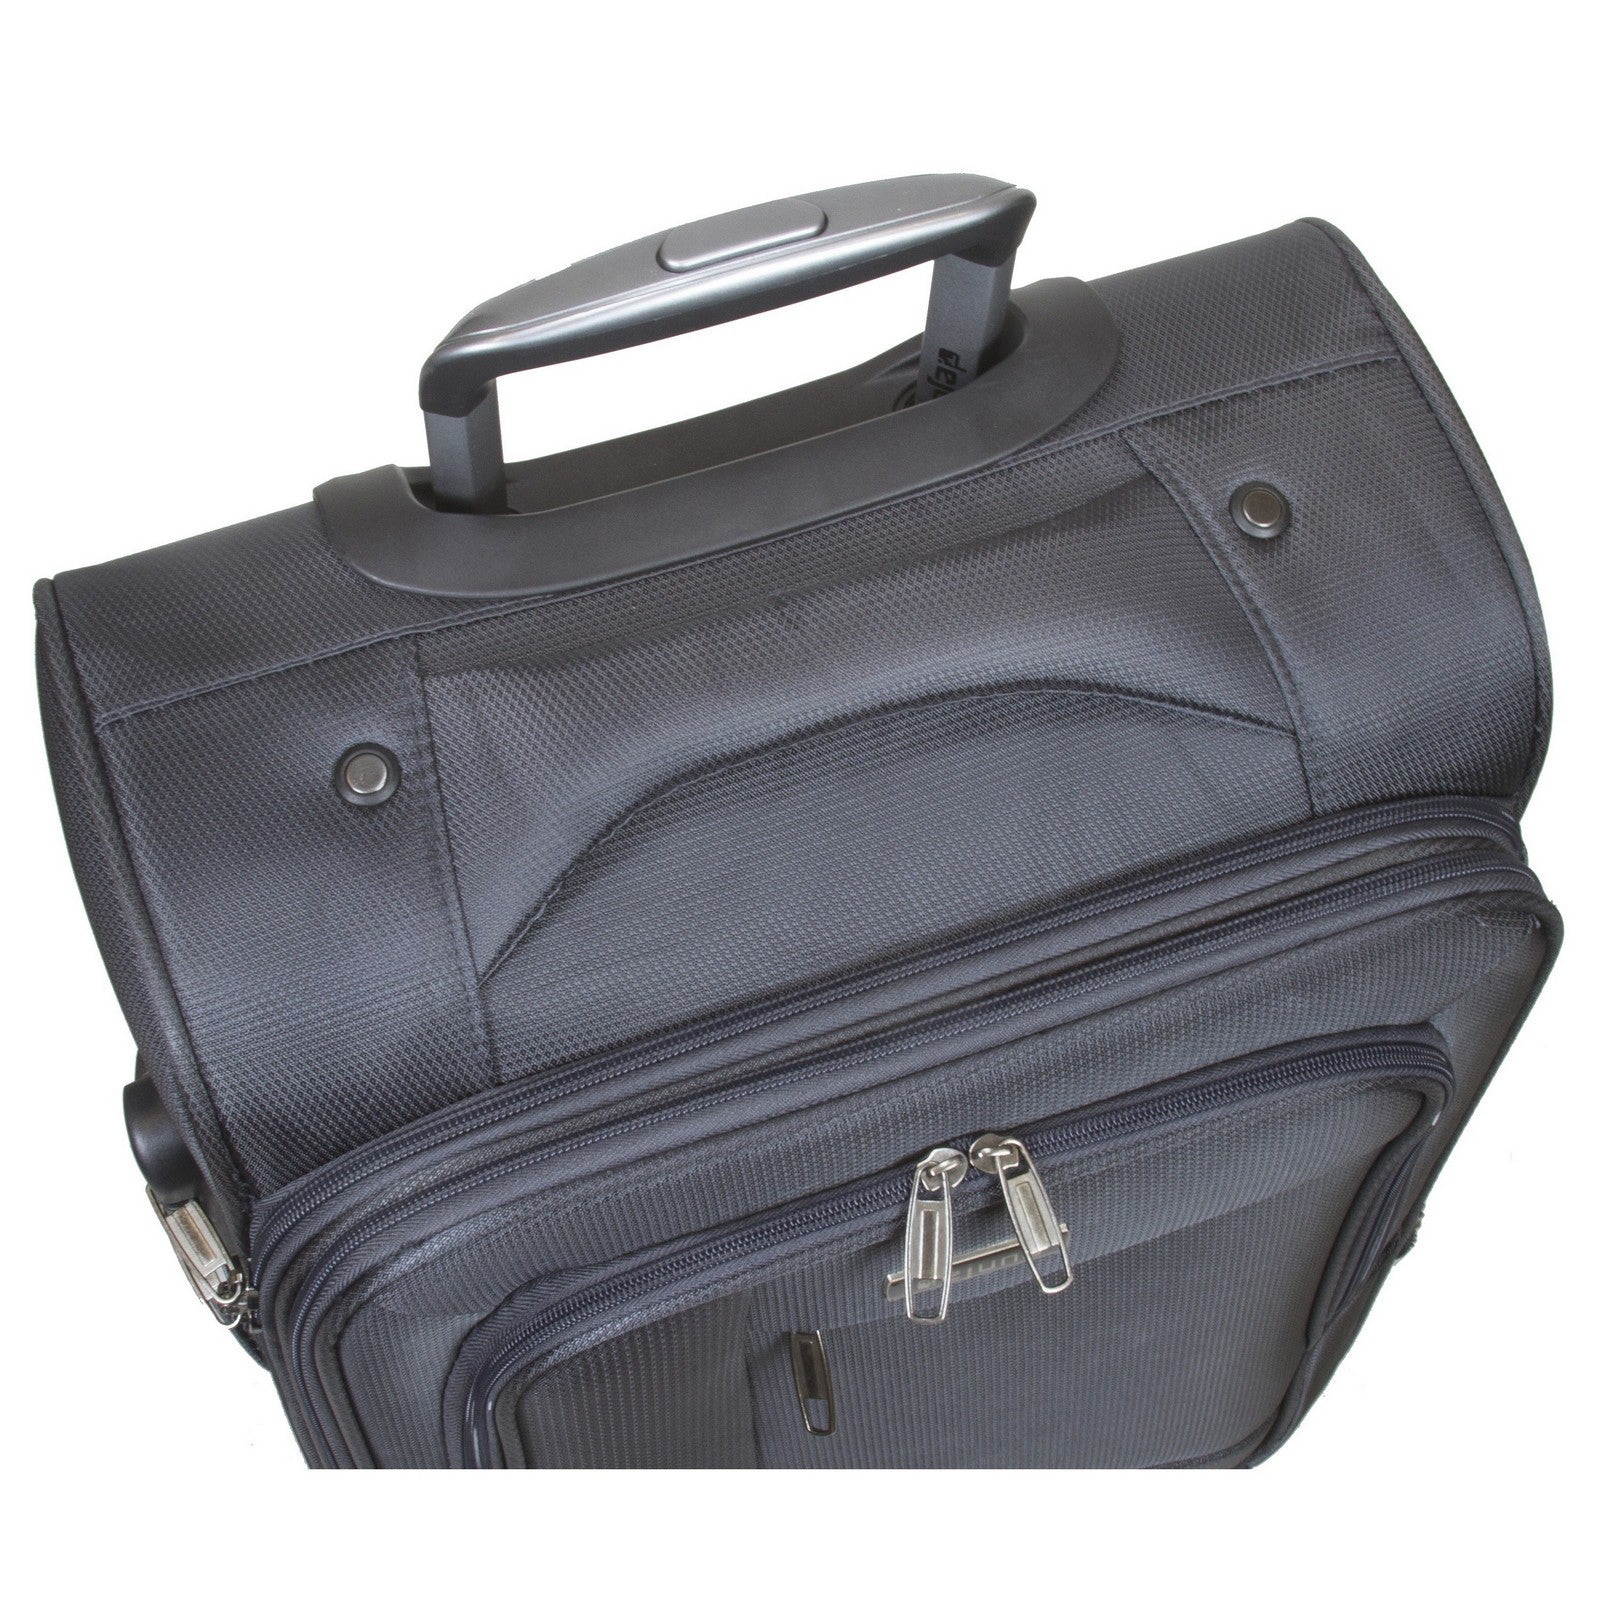 Dejuno Twilight Lightweight Nylon 3-Piece Spinner Luggage Set